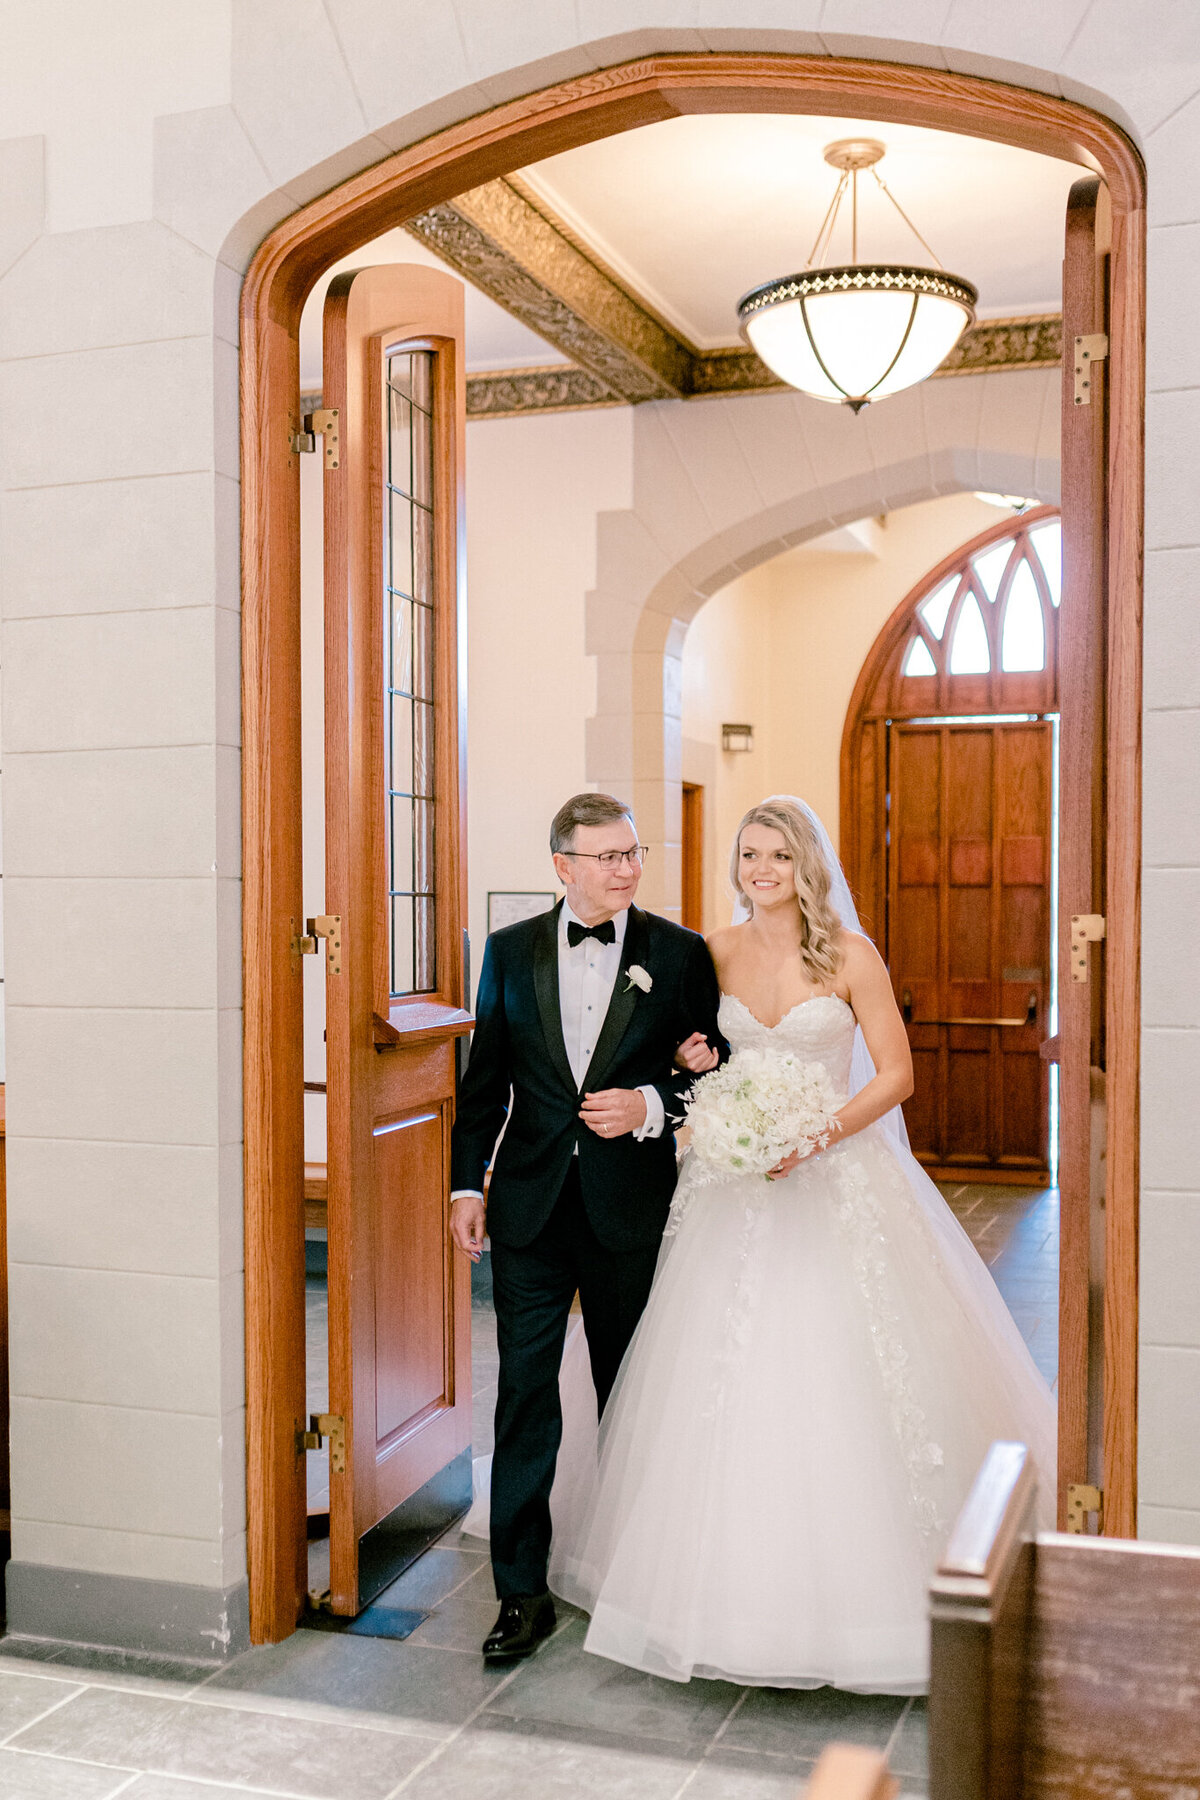 Shelby & Thomas's Wedding at HPUMC The Room on Main | Dallas Wedding Photographer | Sami Kathryn Photography-106